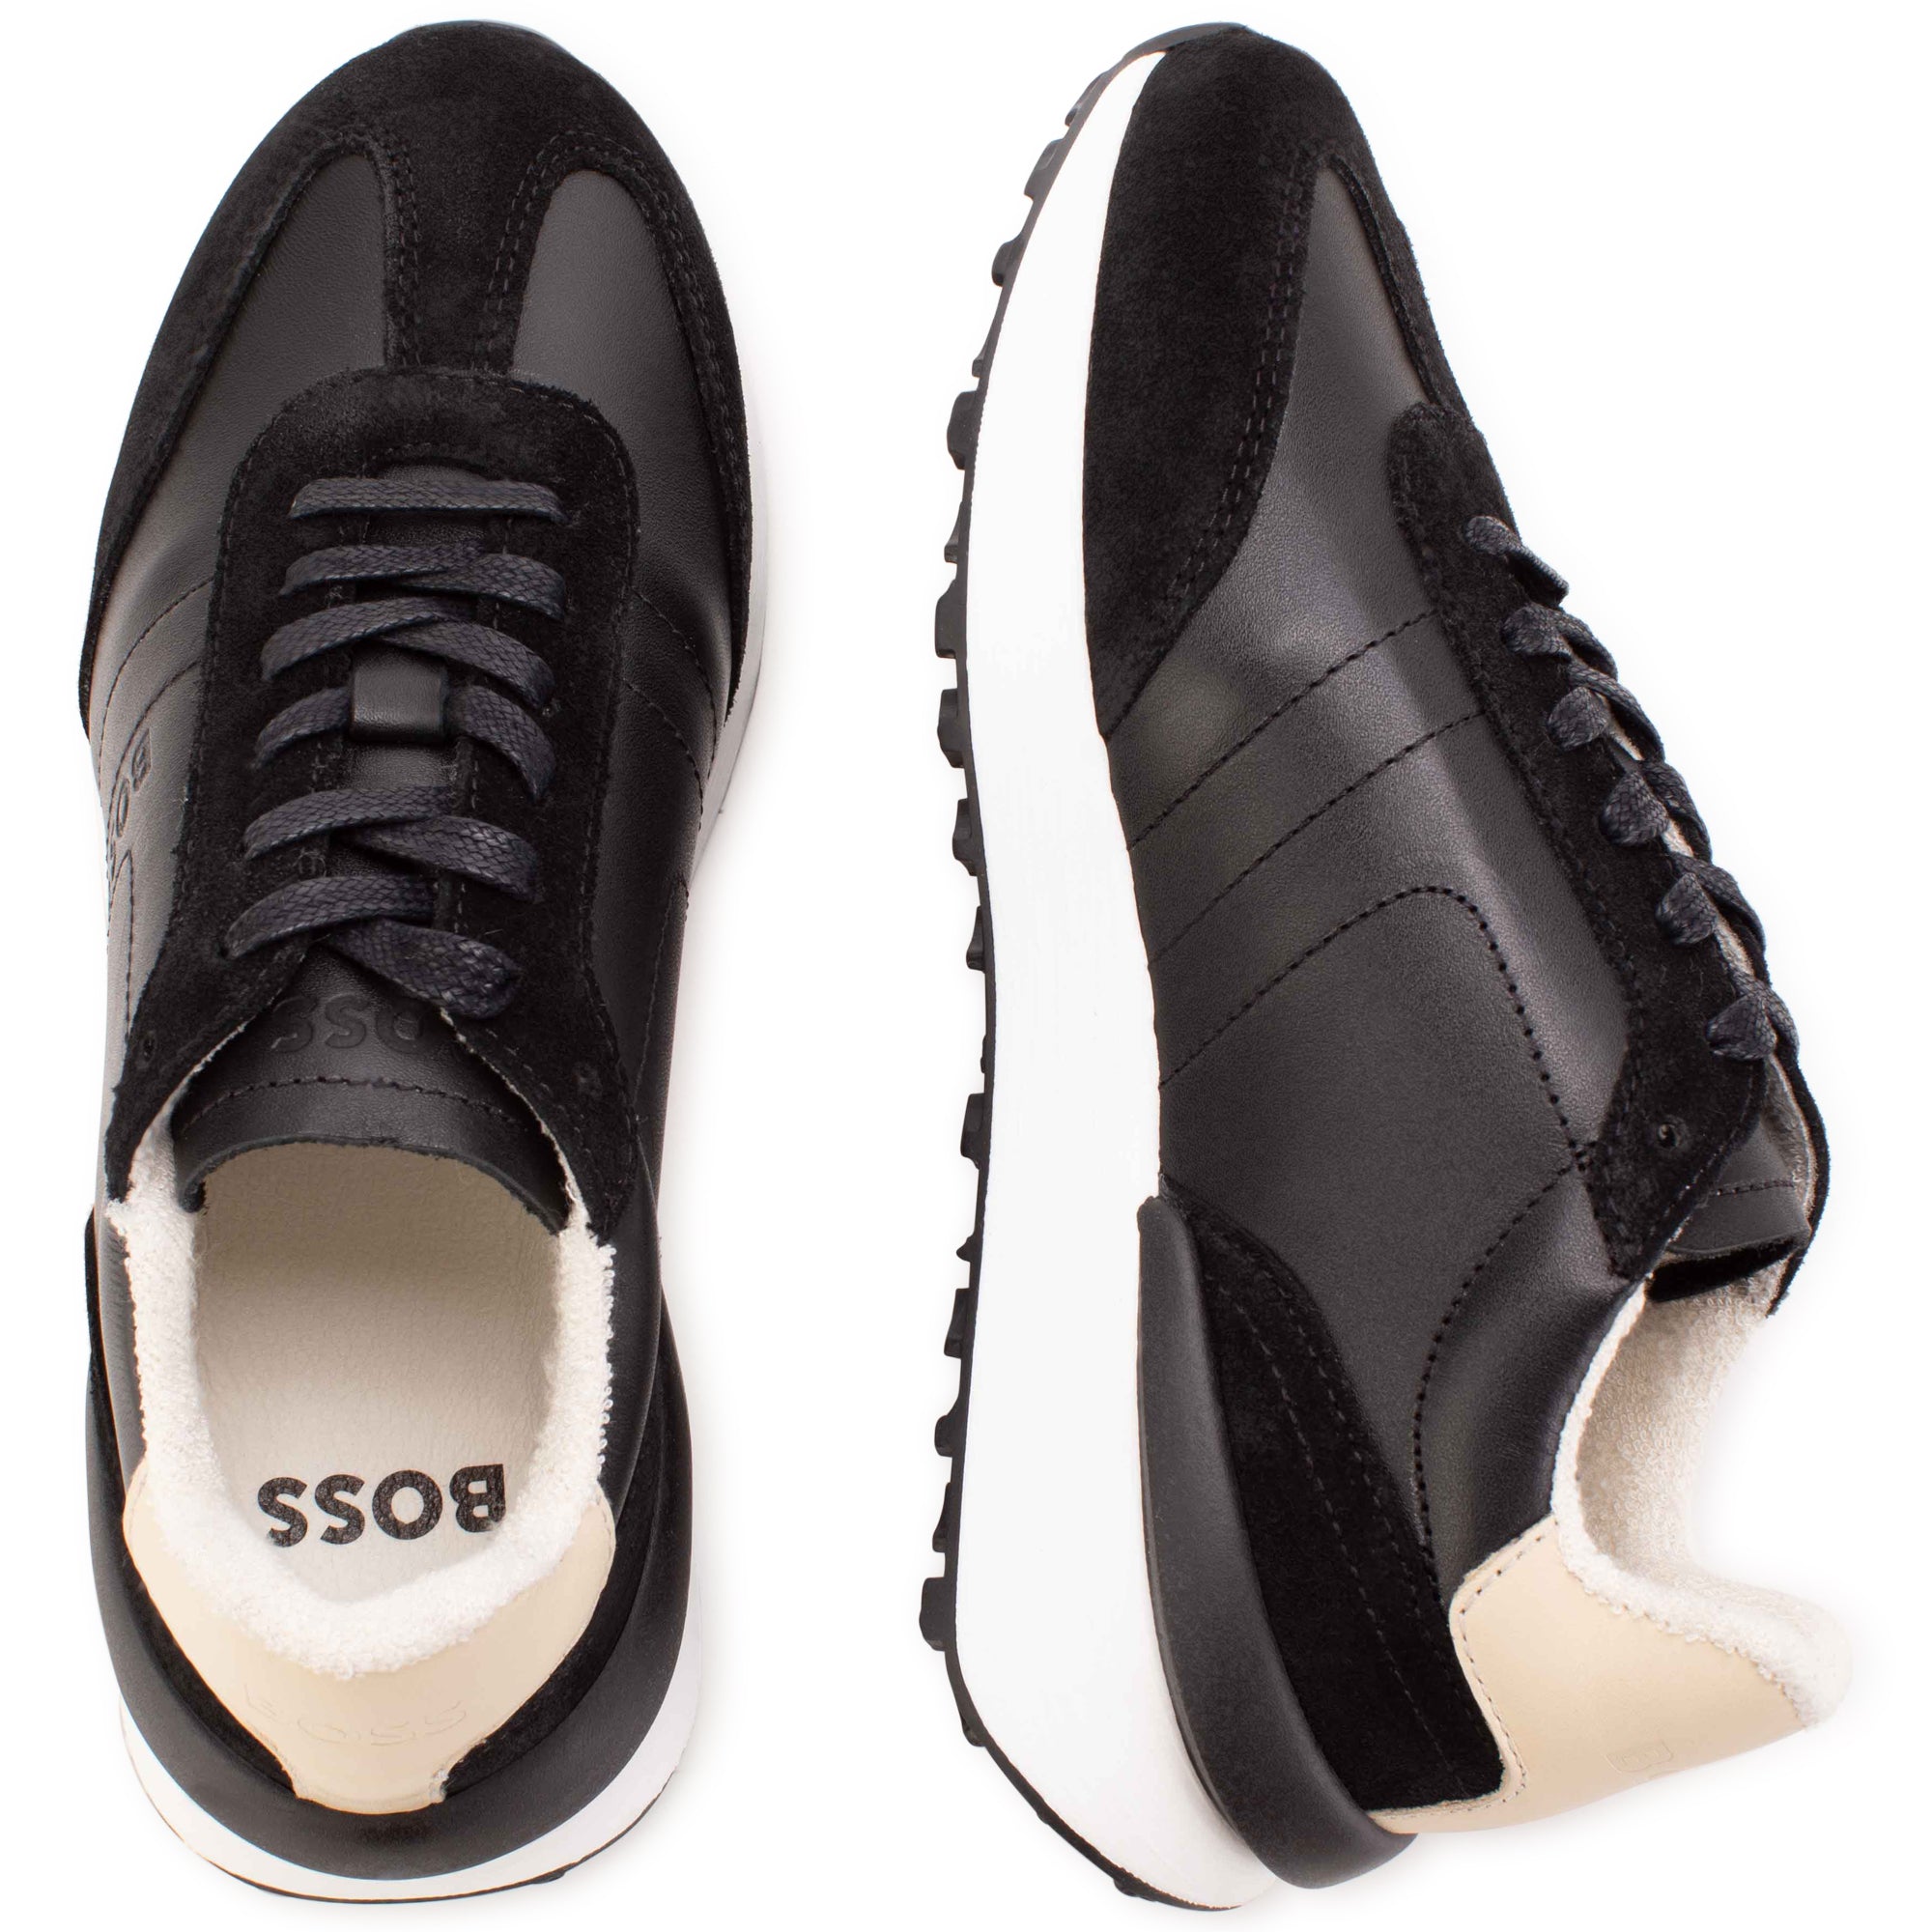 Hugo Boss Retro Sneakers